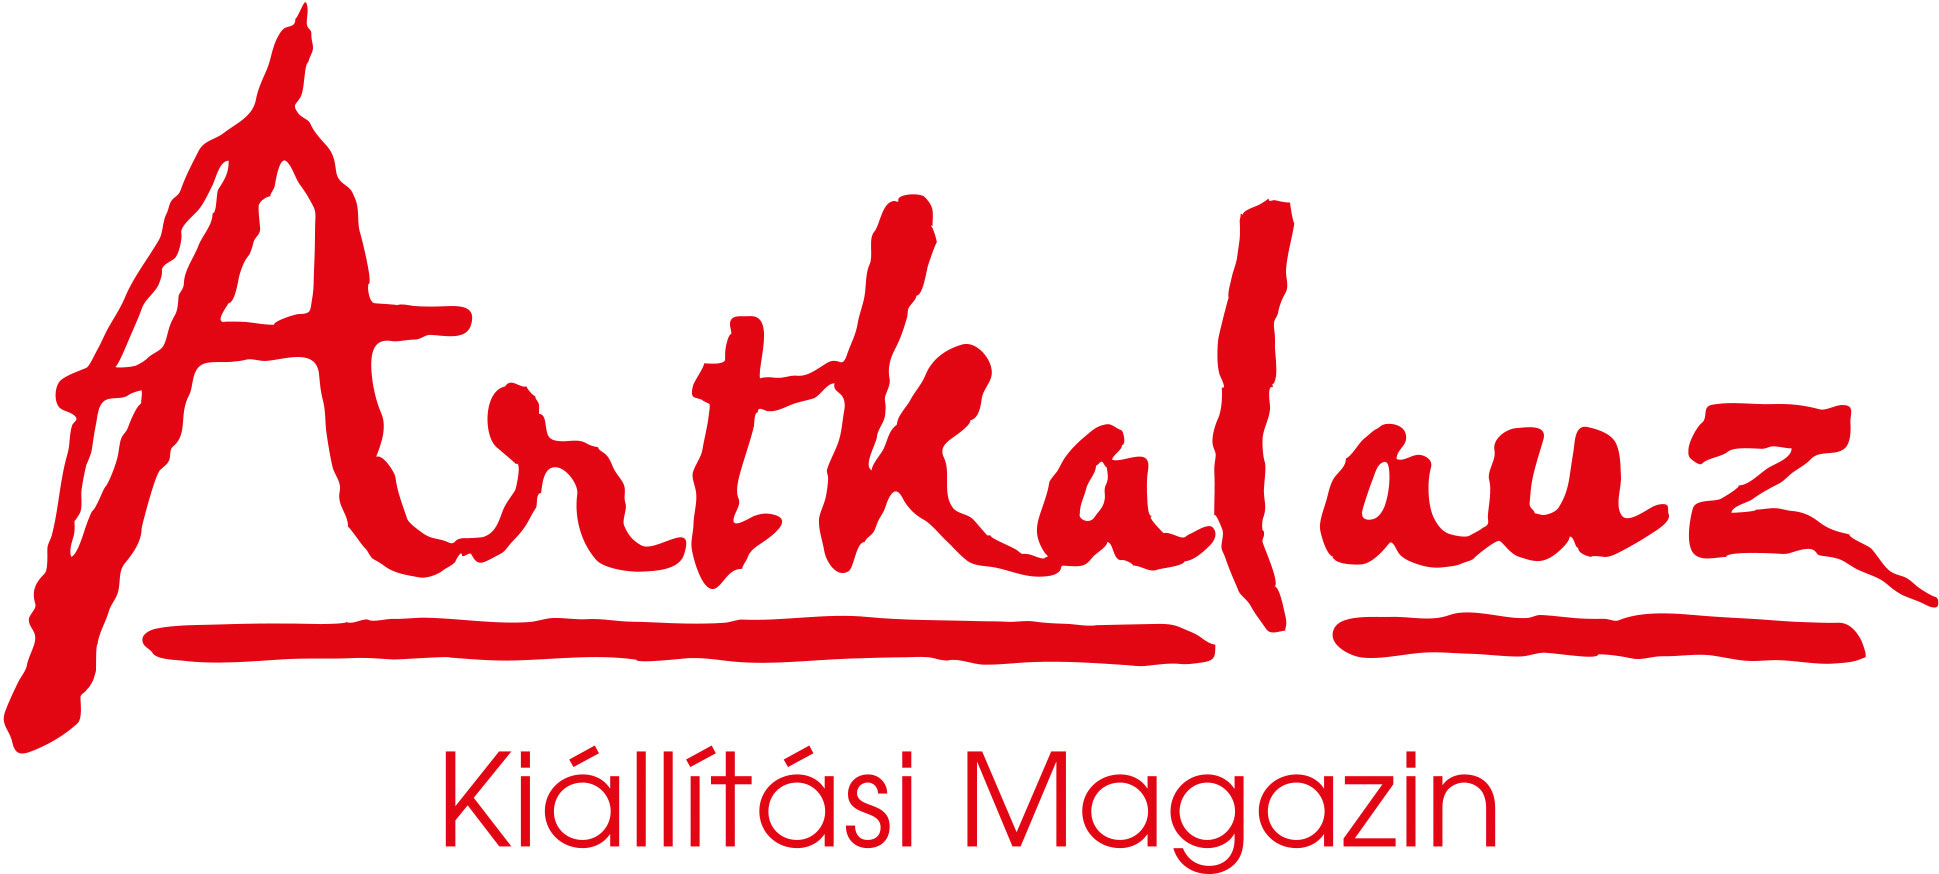 ArtKalauz logo s